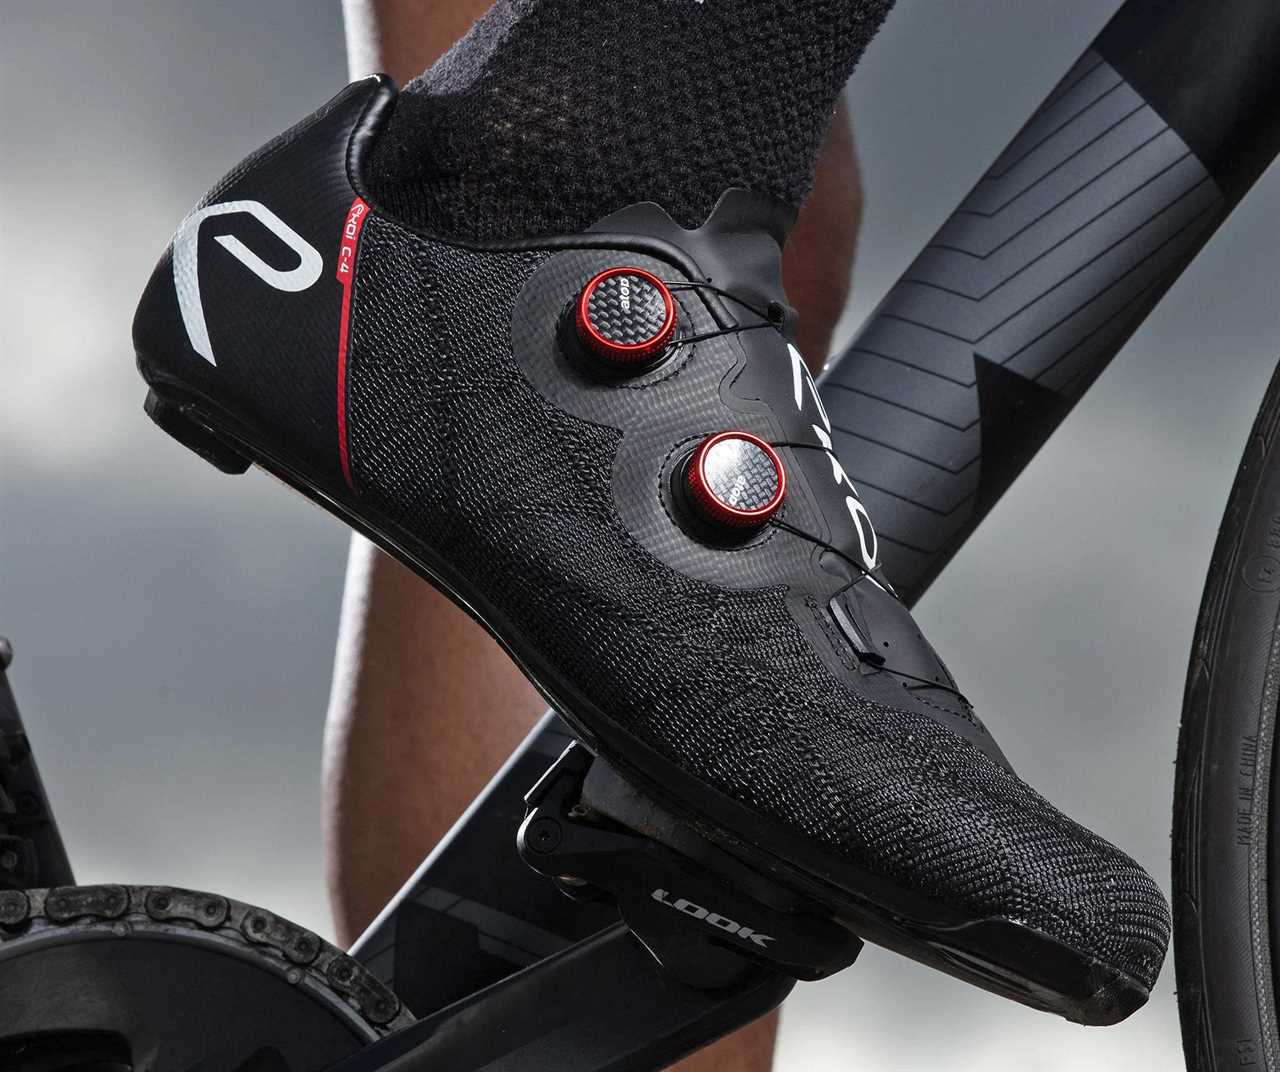 Ekoï C-4 carbon road bike shoes, affordable Ekoi full-carbon sole woven mesh vented cycling shoe, on pedal